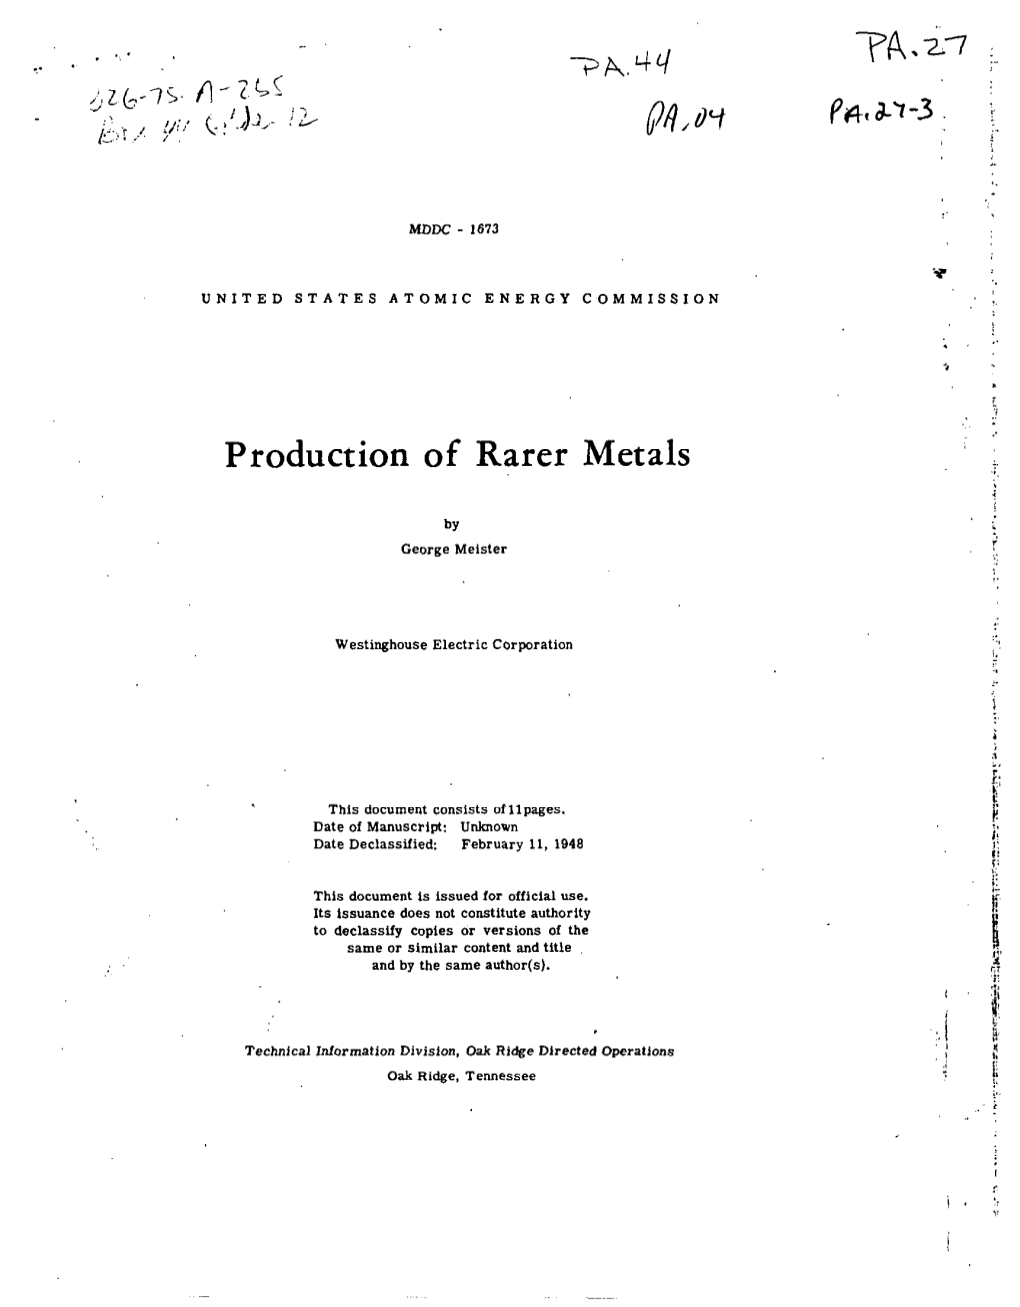 Production of Rarer Metals